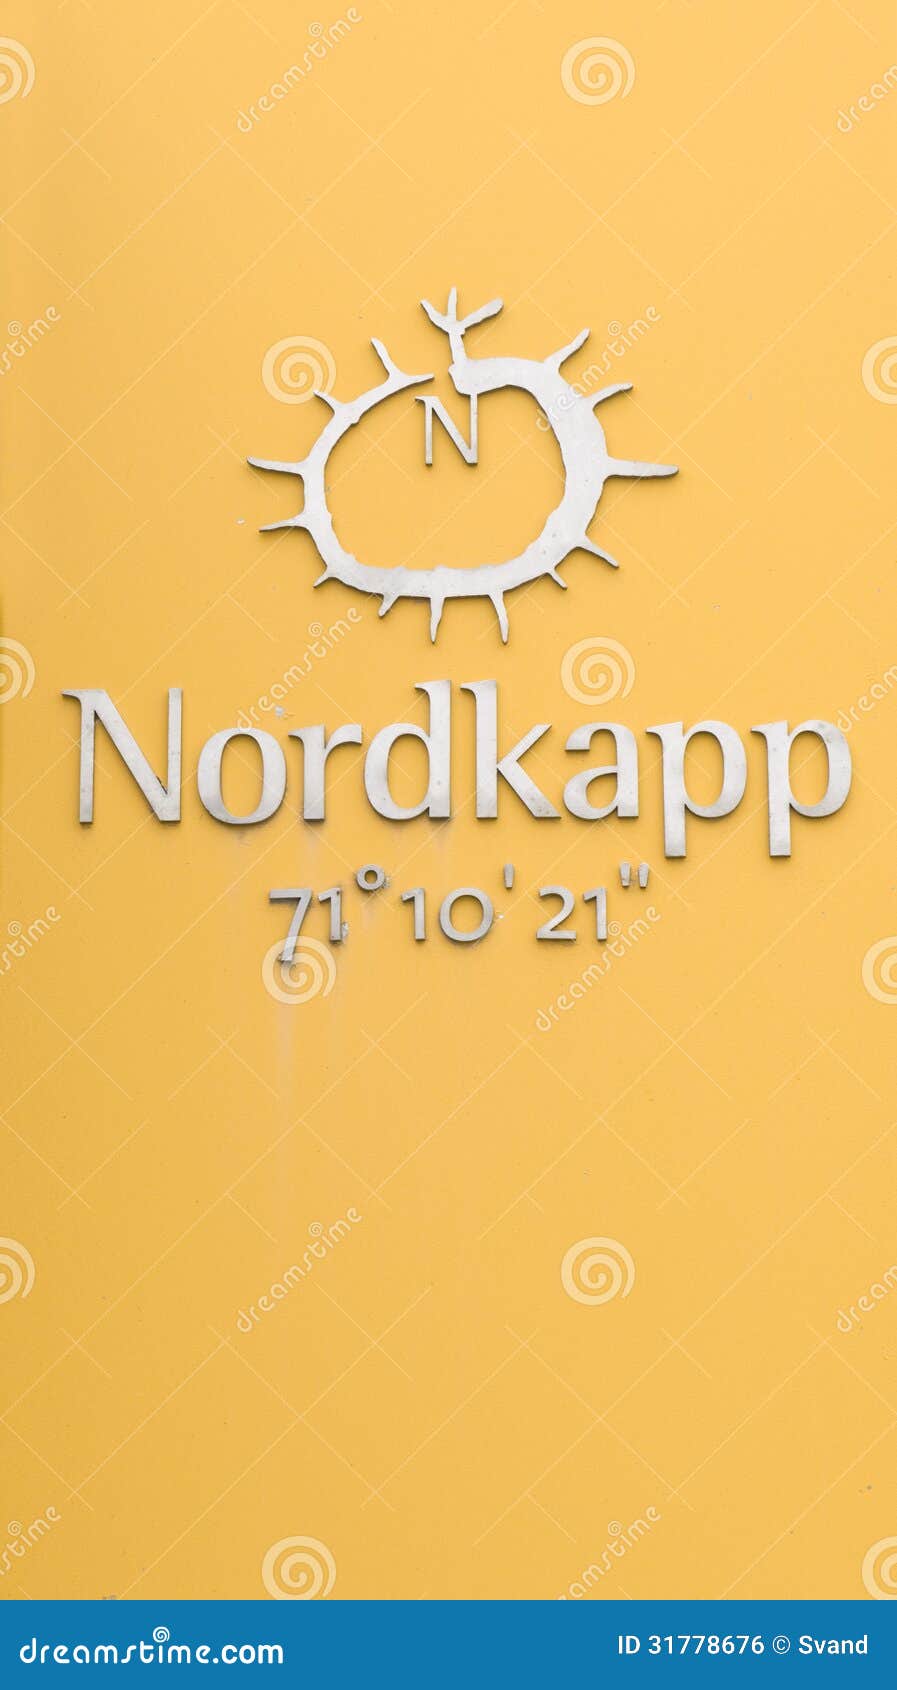 emblem of nordkapp